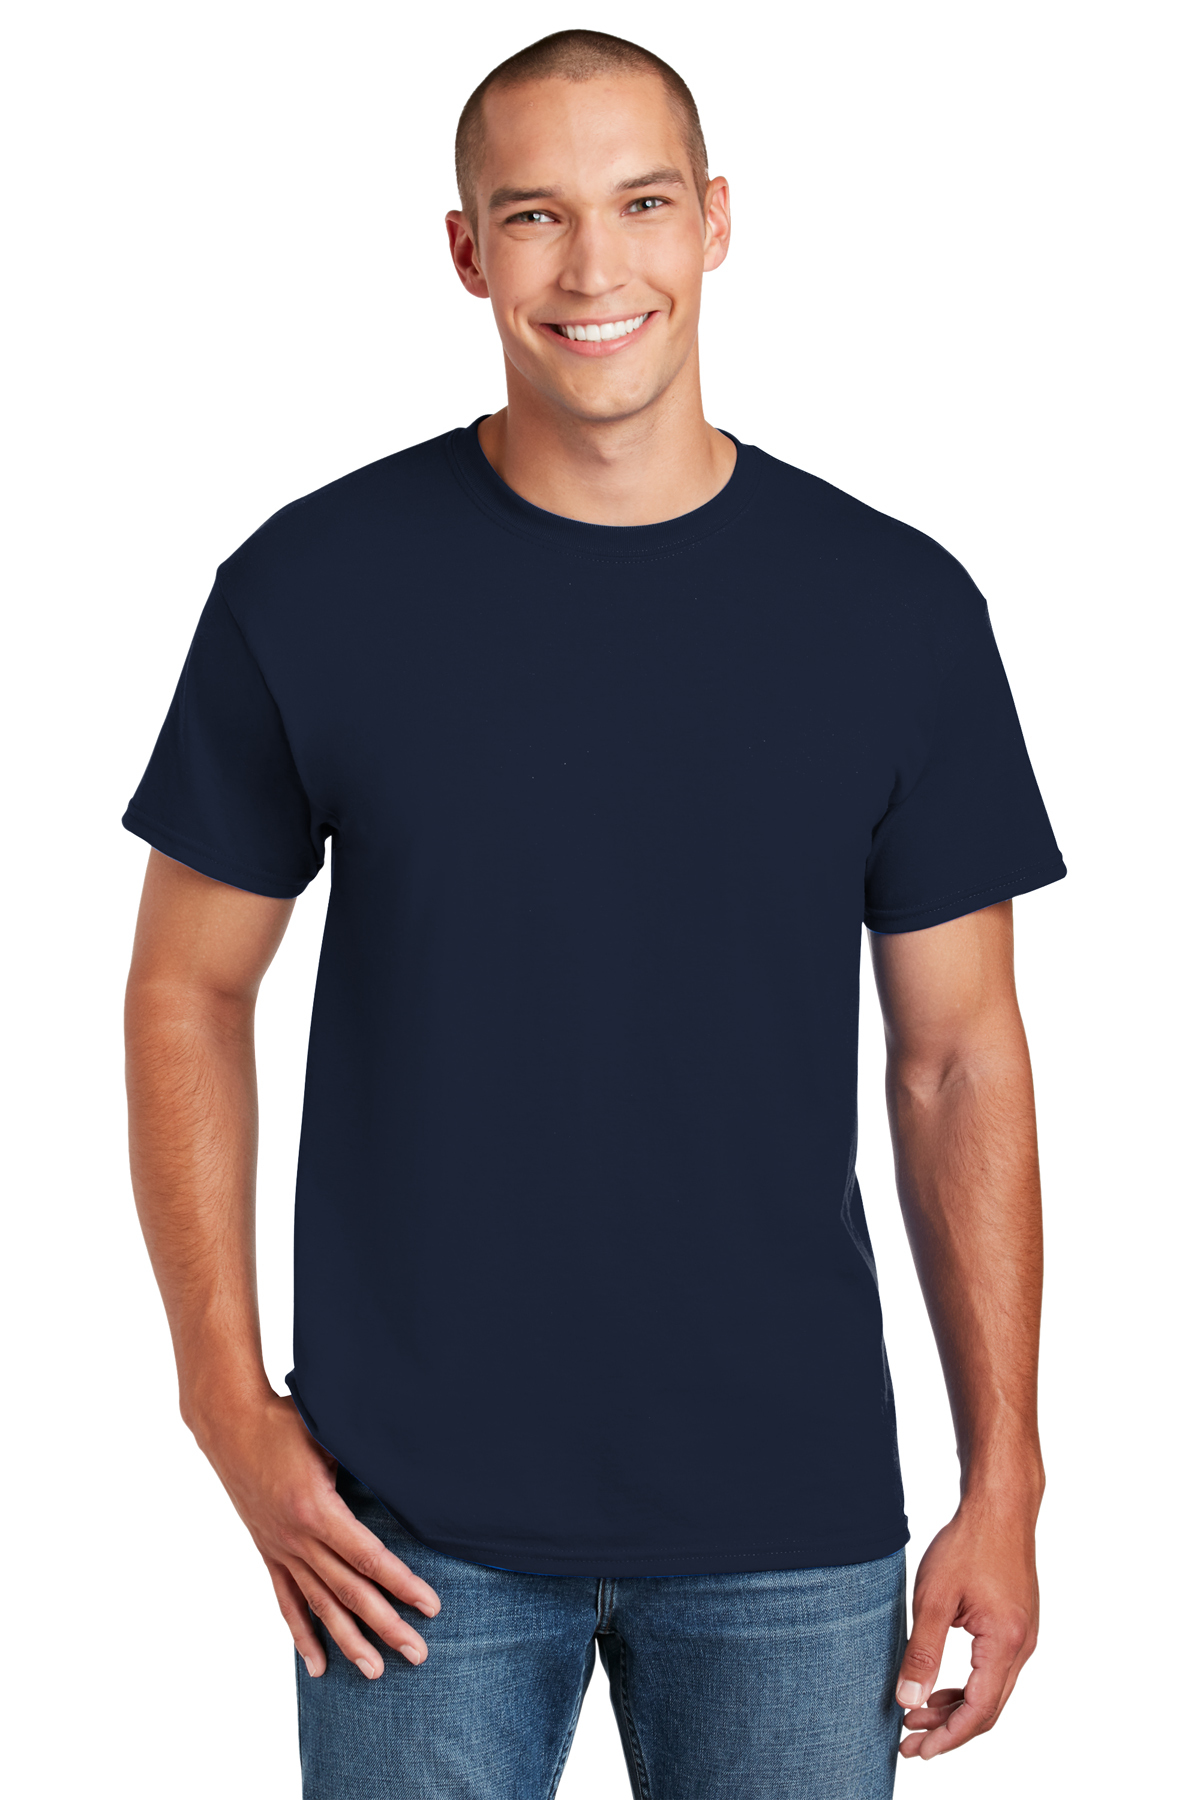 | Poly DryBlend 50 T-Shirt Company Casuals Gildan | Cotton/50 - Product